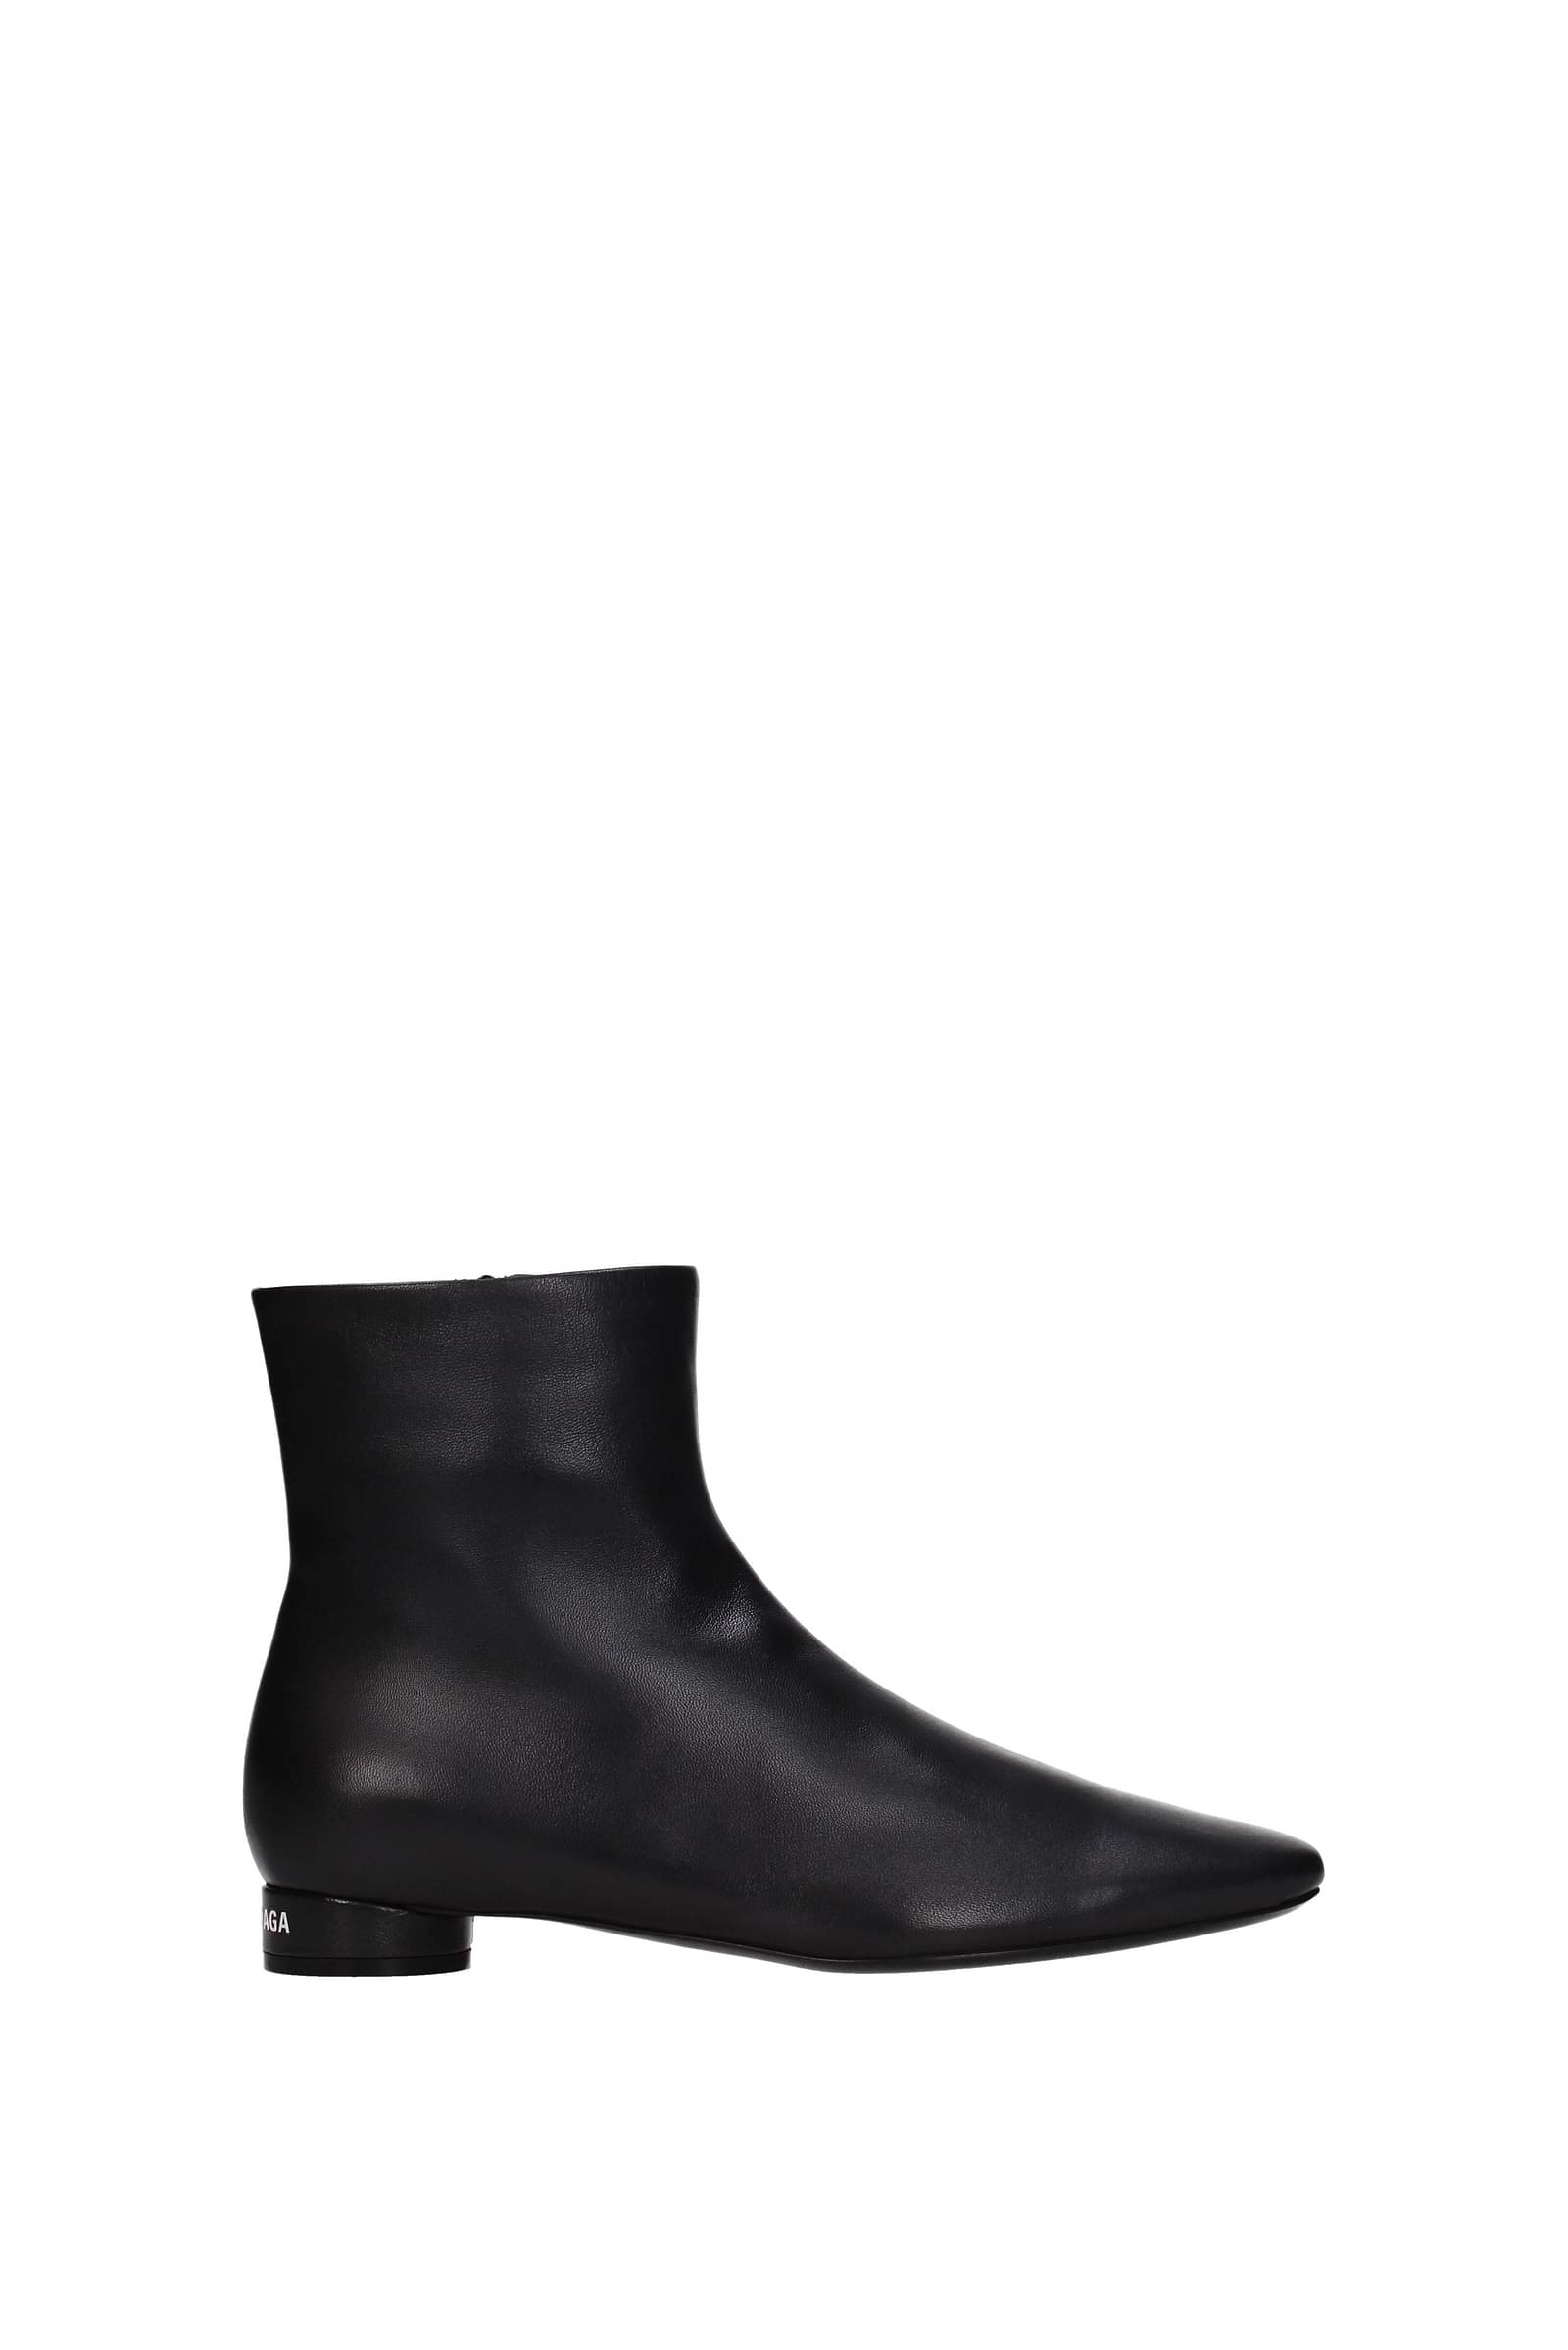 Balenciaga  Women039s leather knee boots size 39 9US  eBay